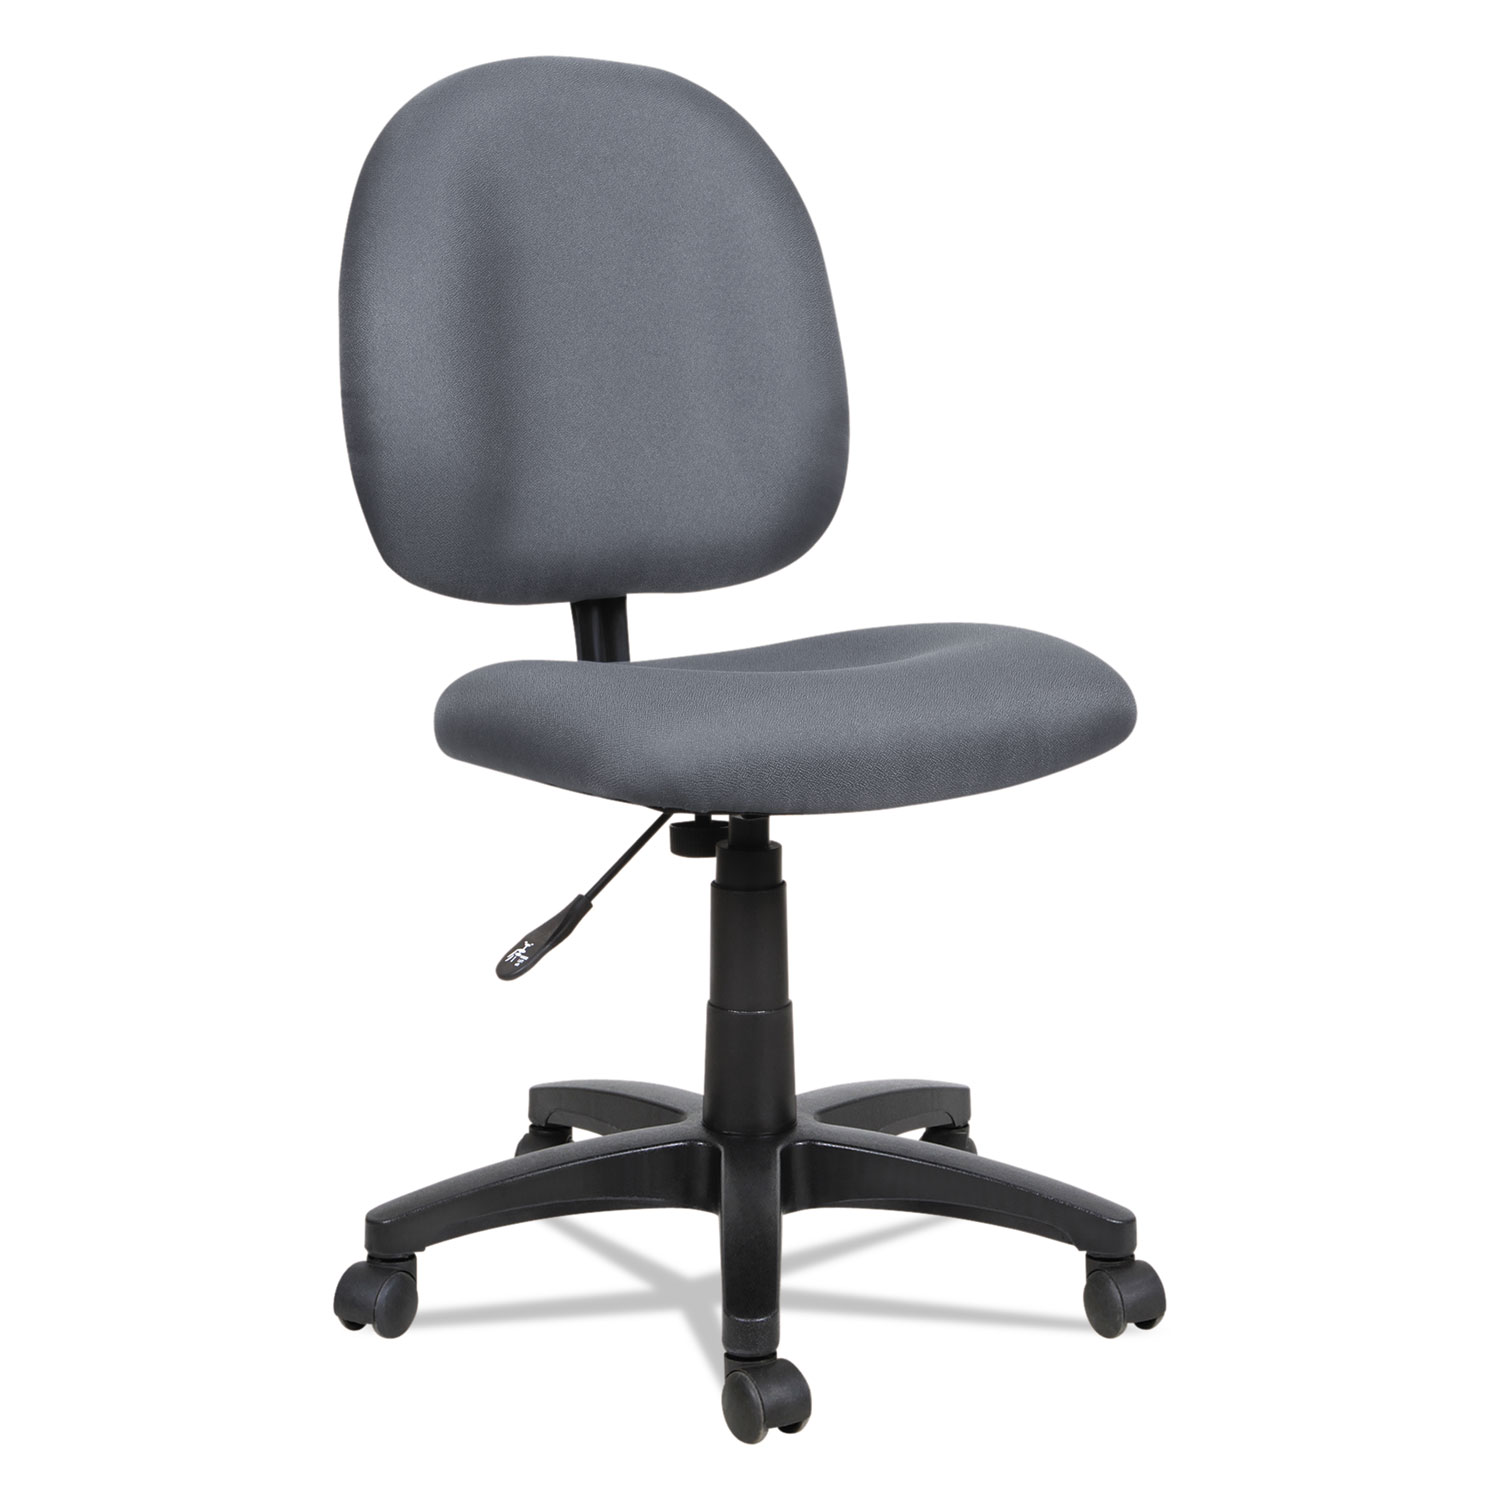  Alera ALEVT48FA40B Alera Essentia Series Swivel Task Chair, Supports up to 275 lbs., Gray Seat/Gray Back, Black Base (ALEVT48FA40B) 